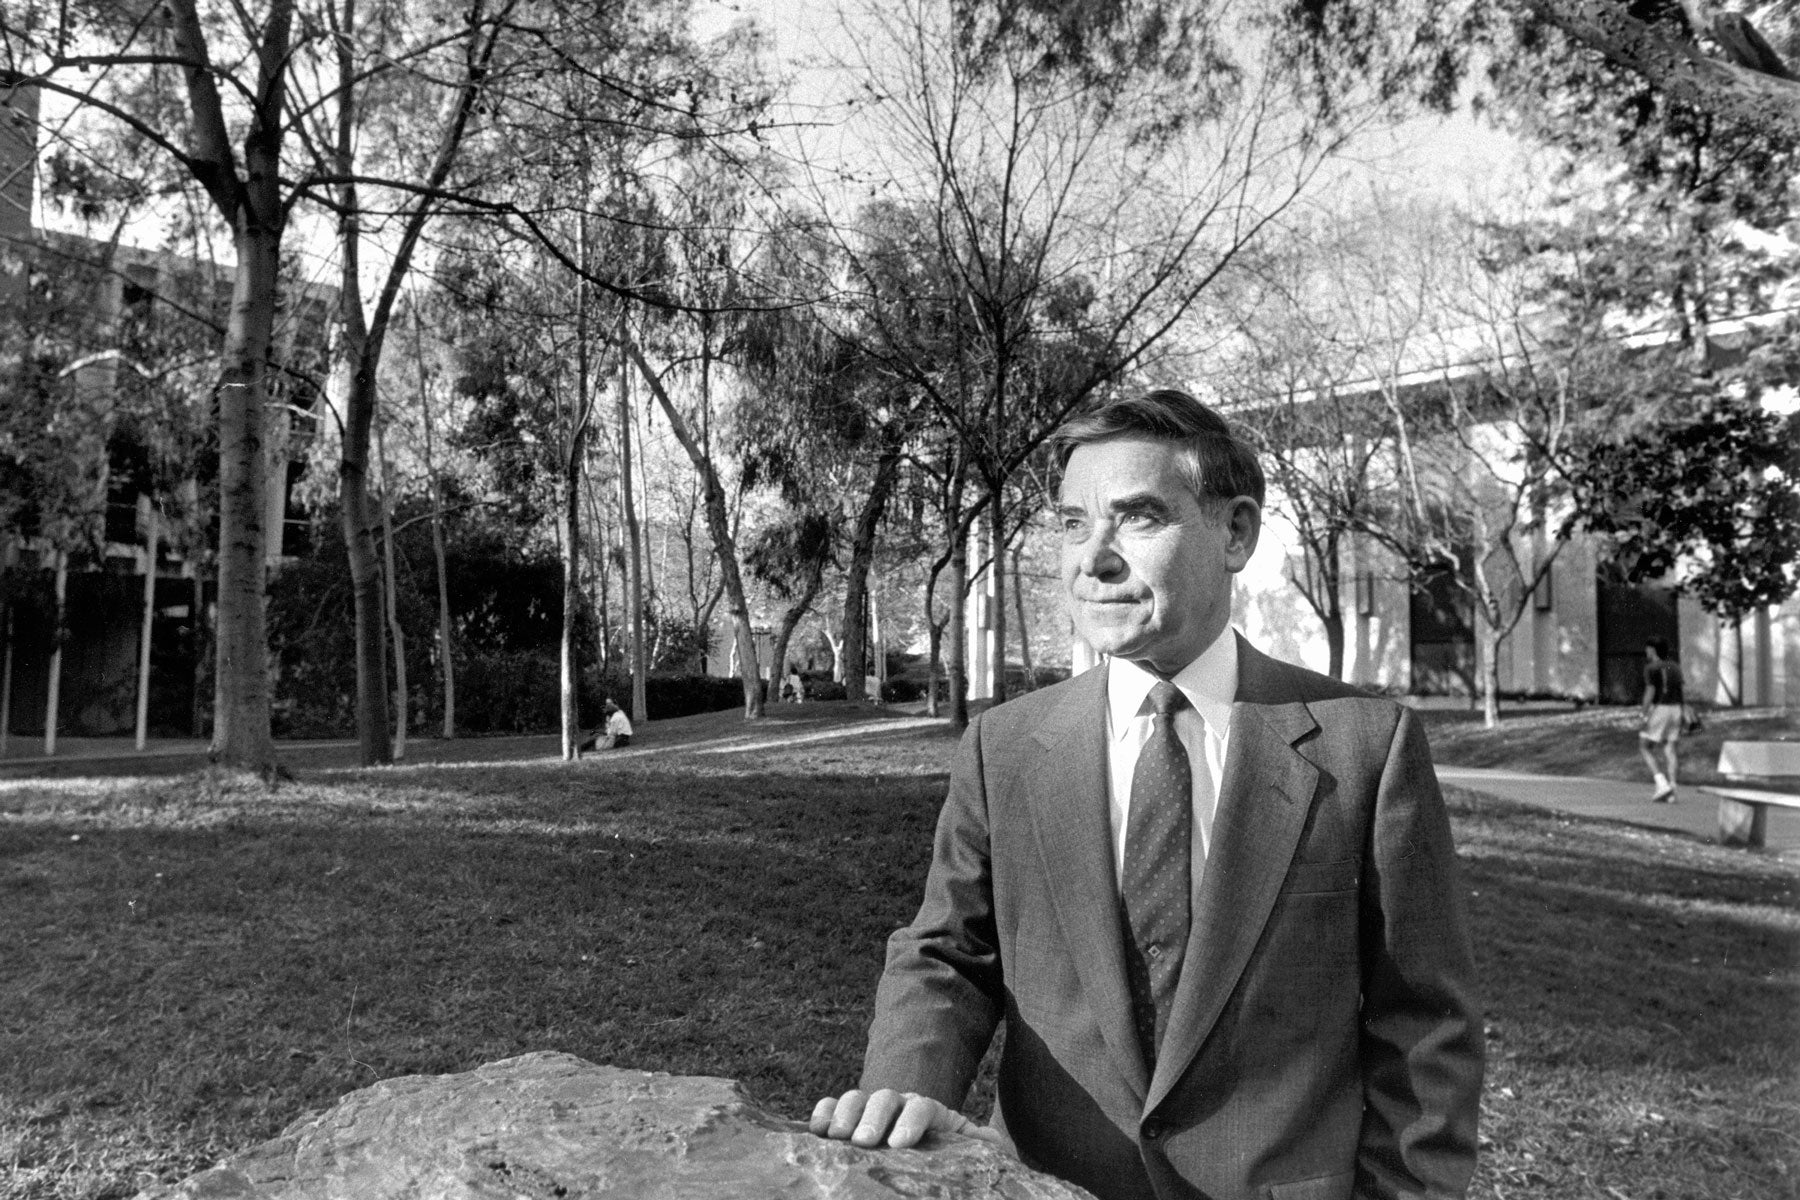 Anthony Lazzaro at University Park Campus in 1984